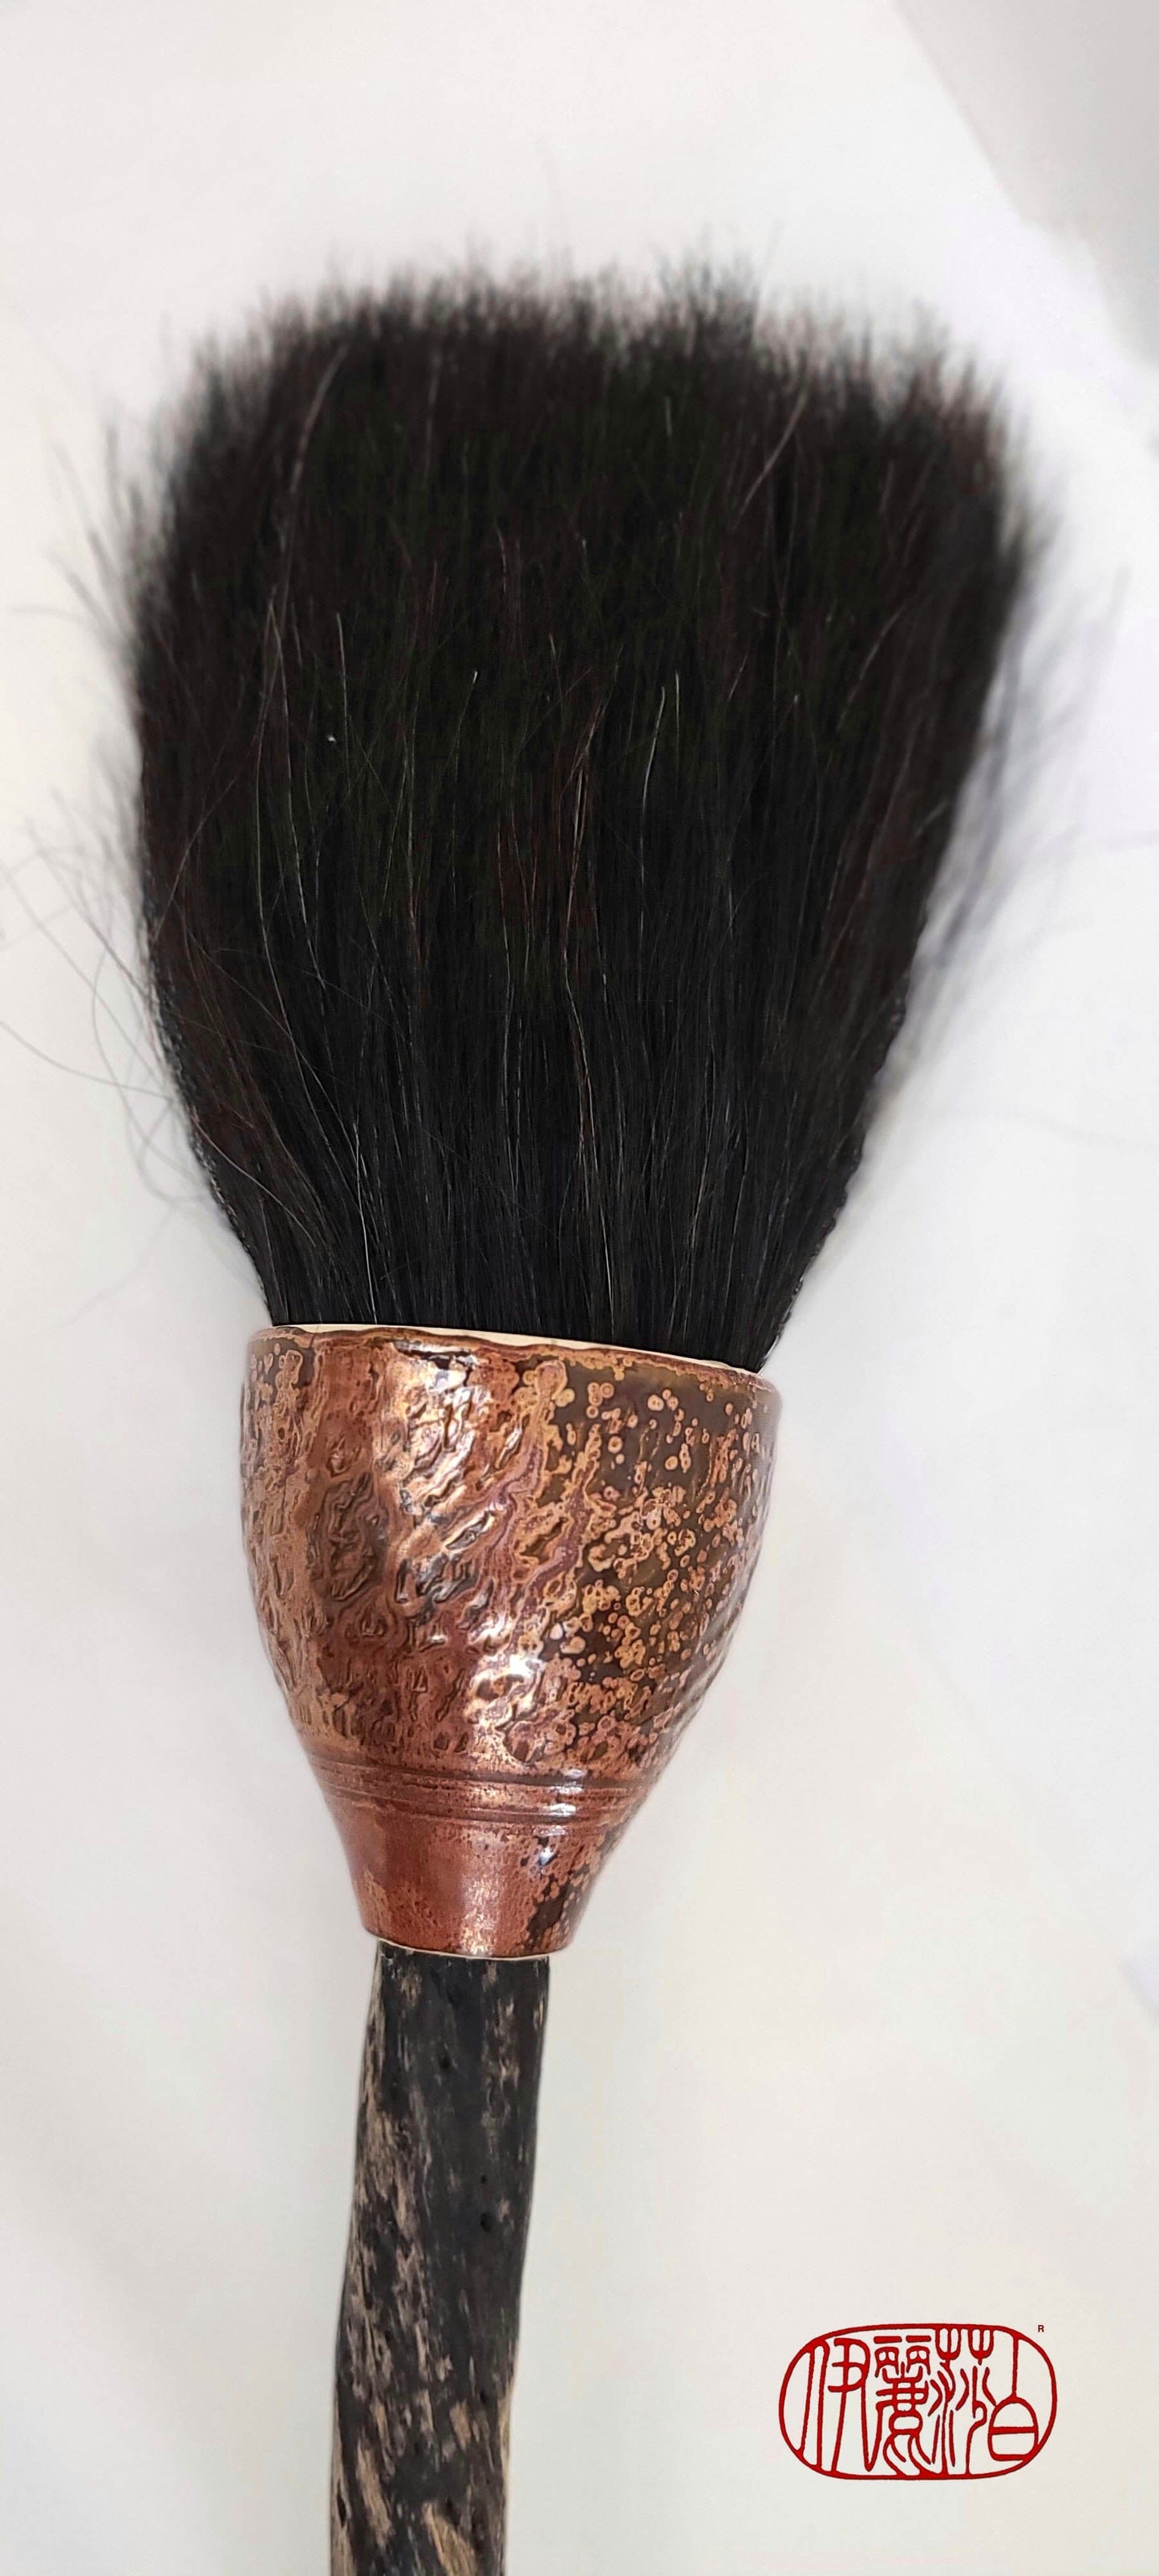 Large Black Horsehair Sumi-e Paint Brush With Ceramic Ferrule Art Supplies Elizabeth Schowachert Art